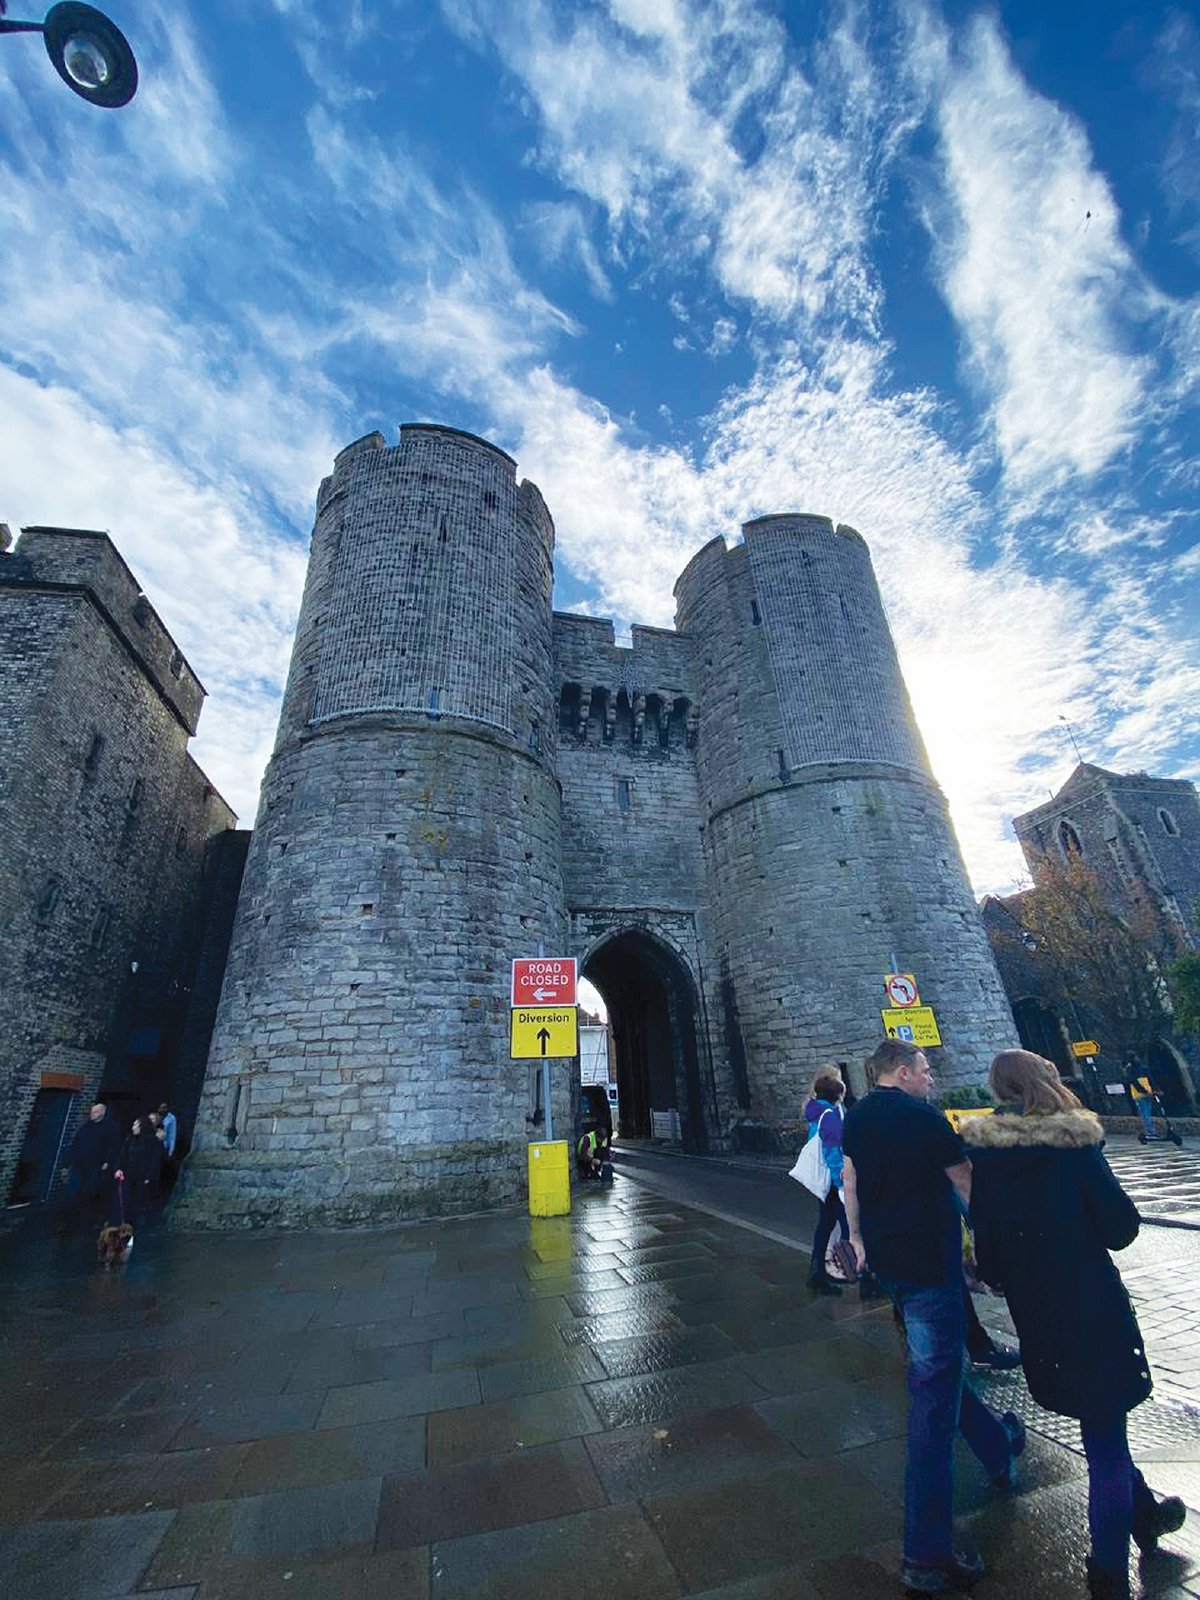 TEGAP bangunan pintu gerbang, Westgate Tower dikatakan antara tujuh binaan abad pertengahan yang terdapat di England.